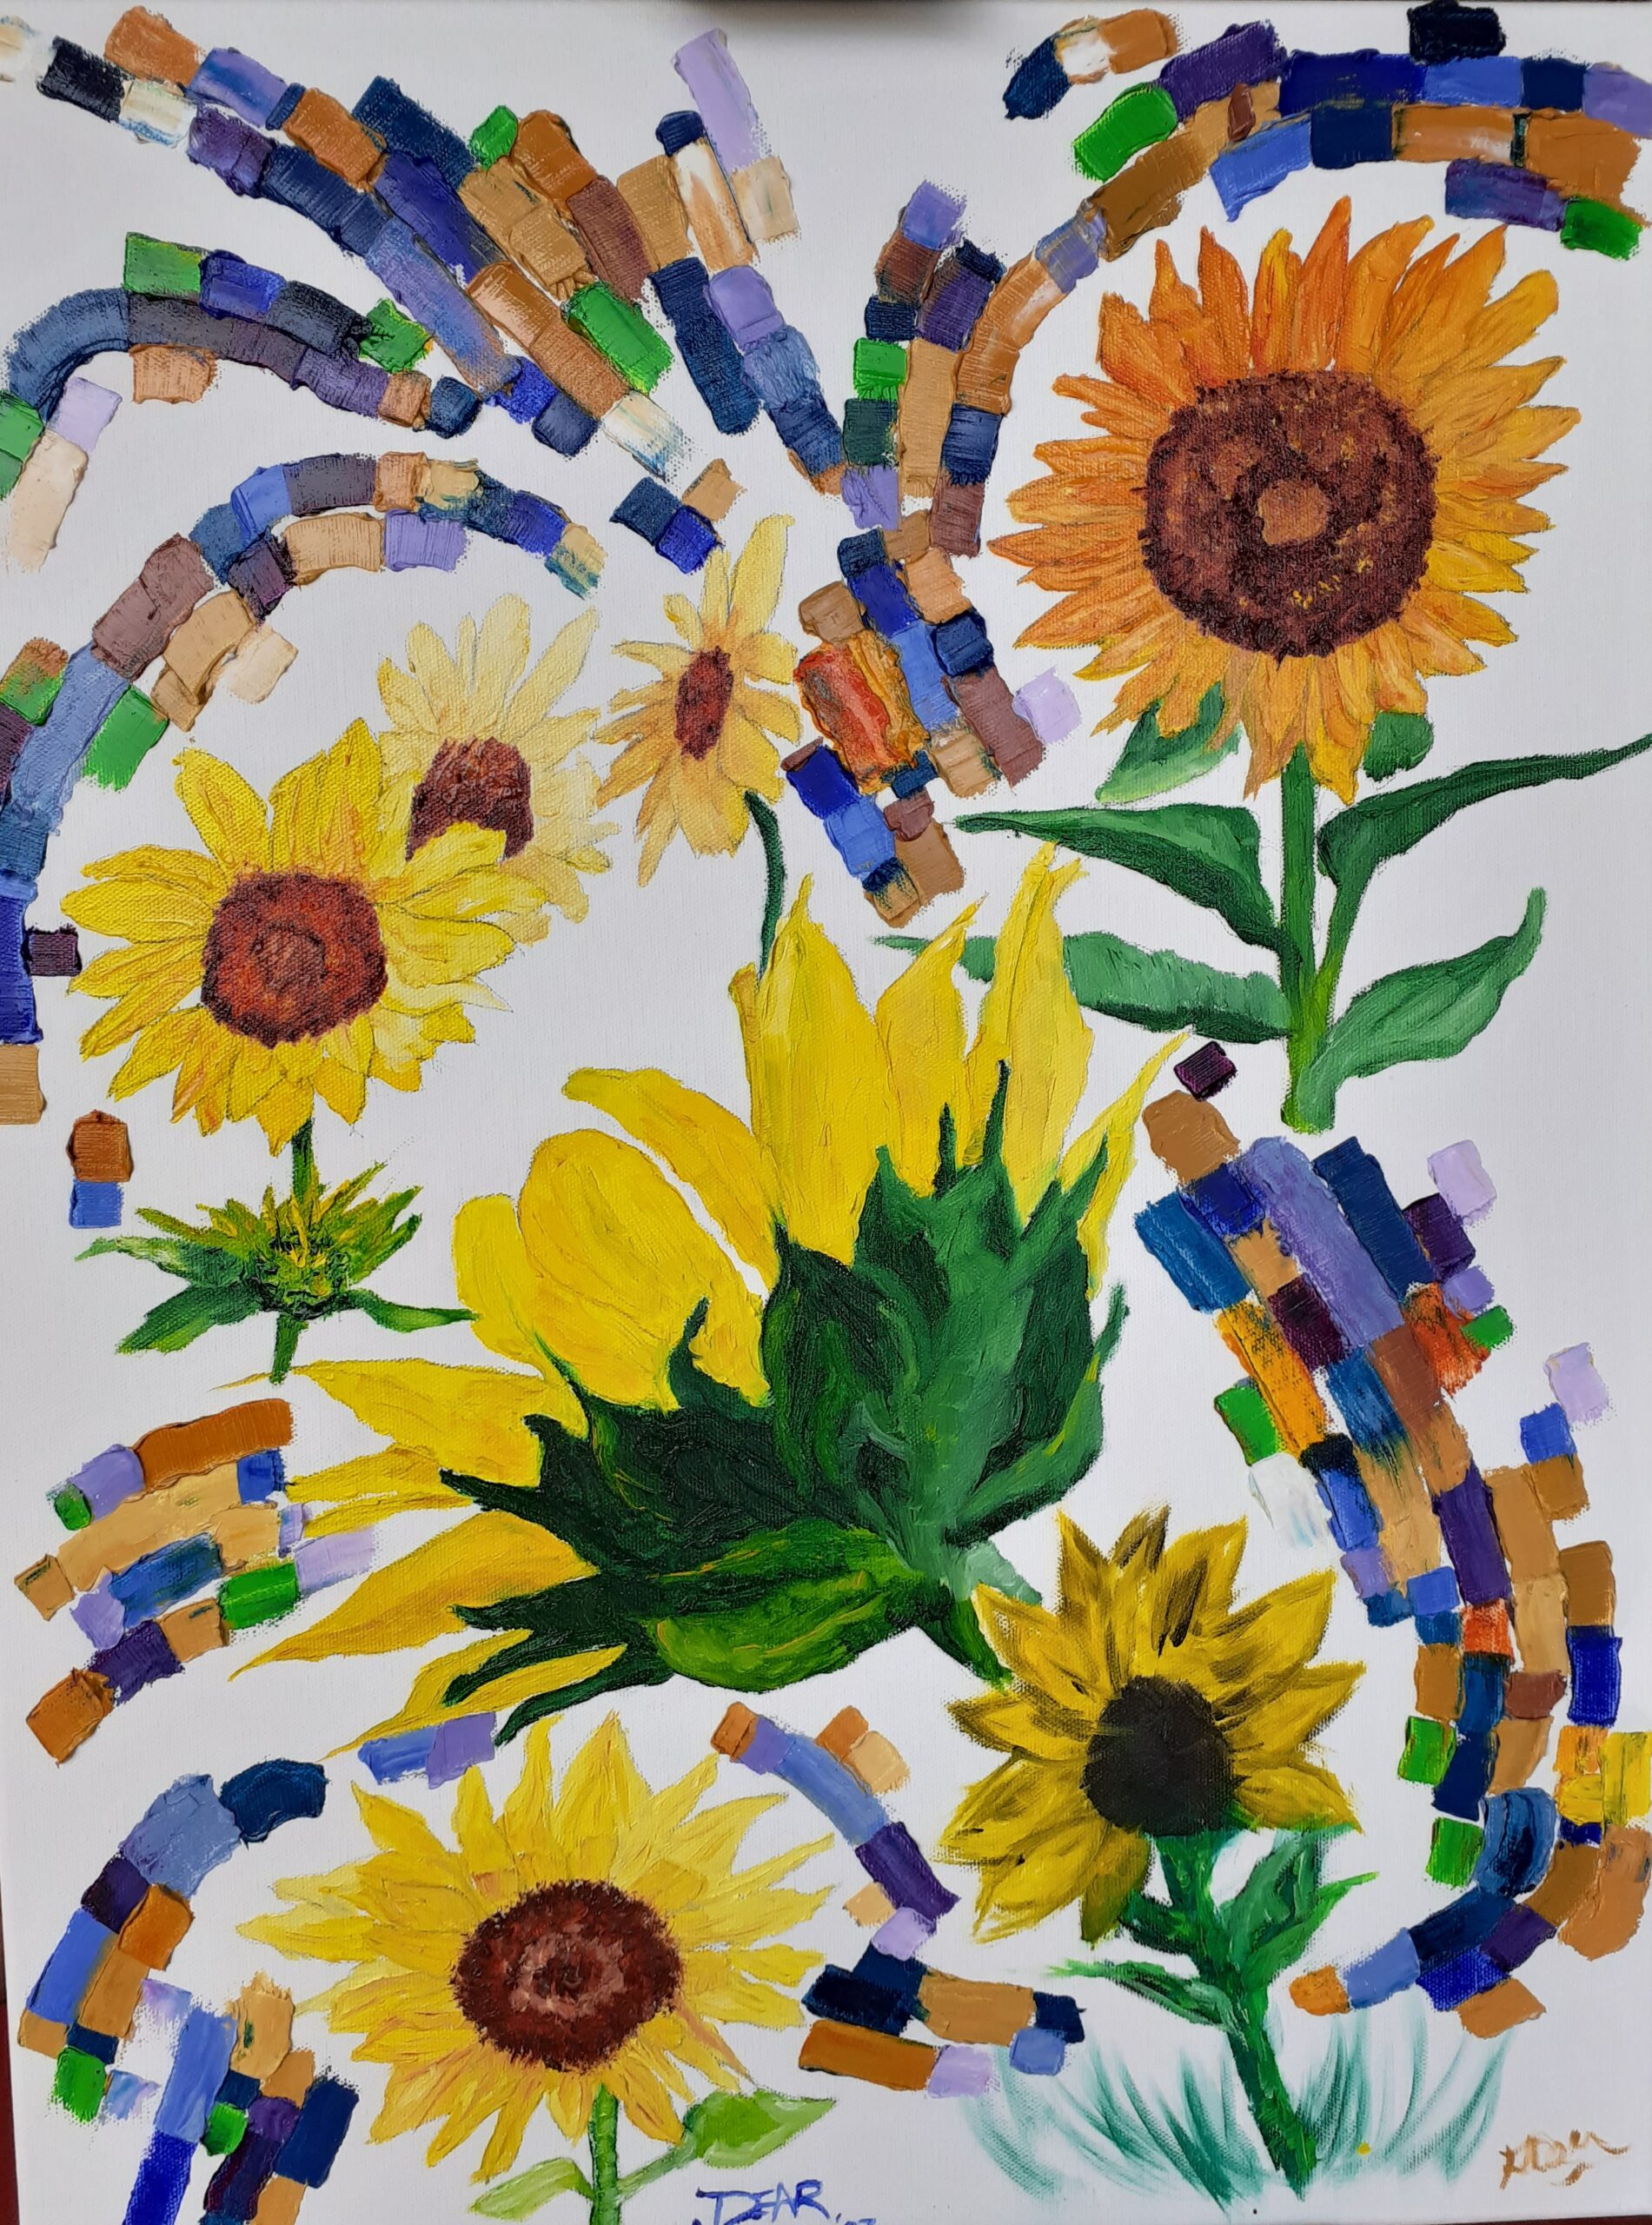 Sunflower Path